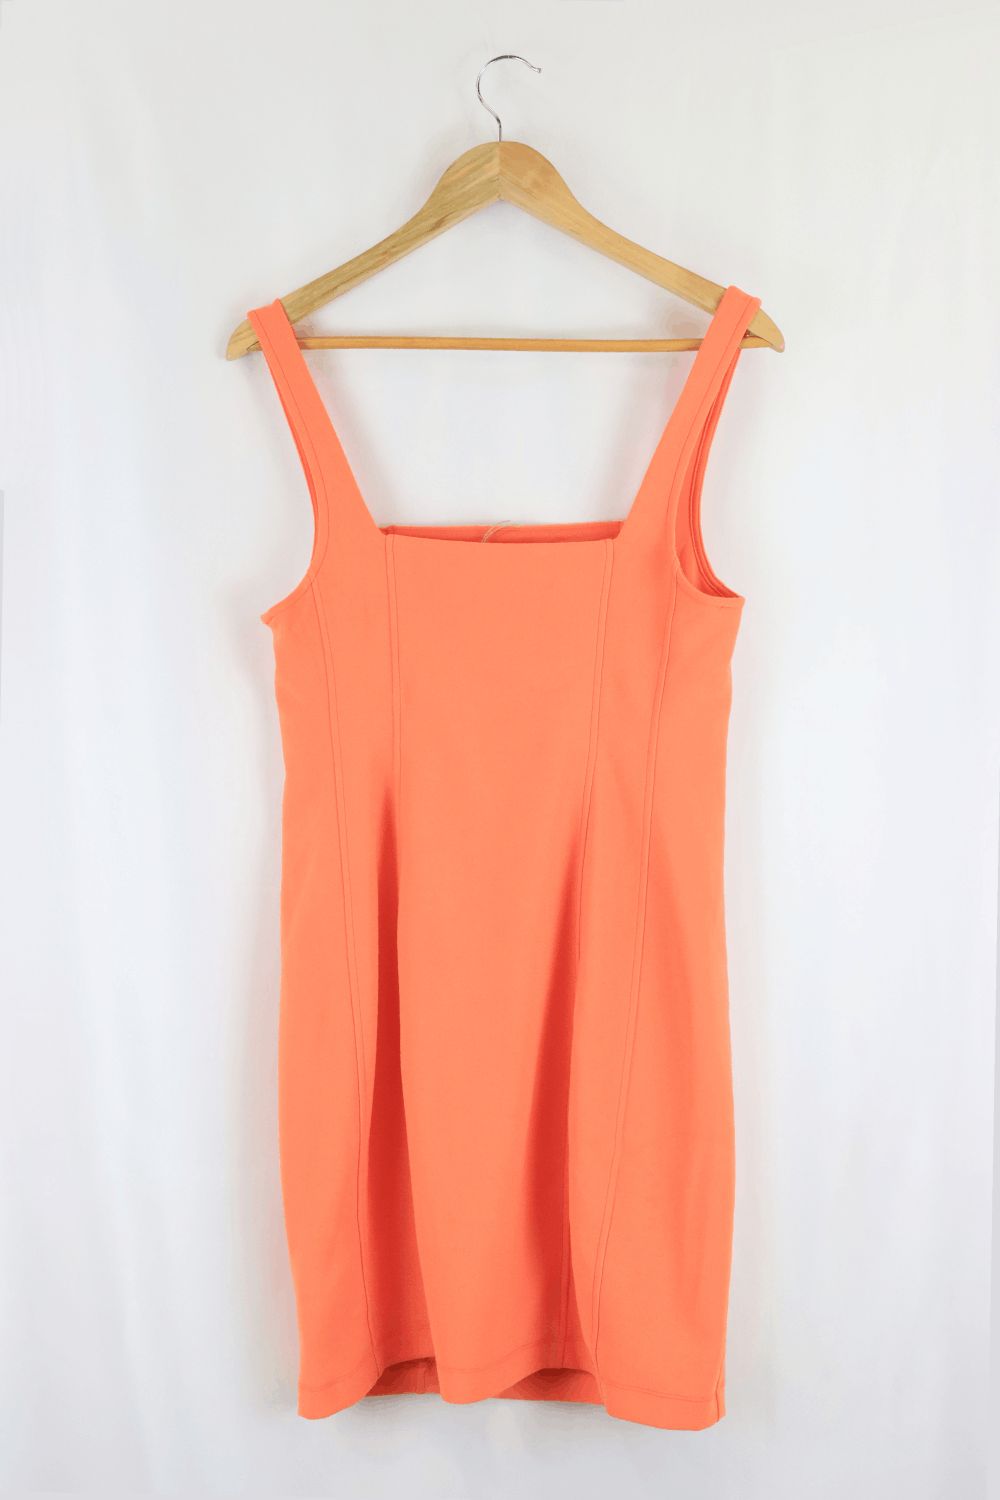 Tokito Orange Dress 14